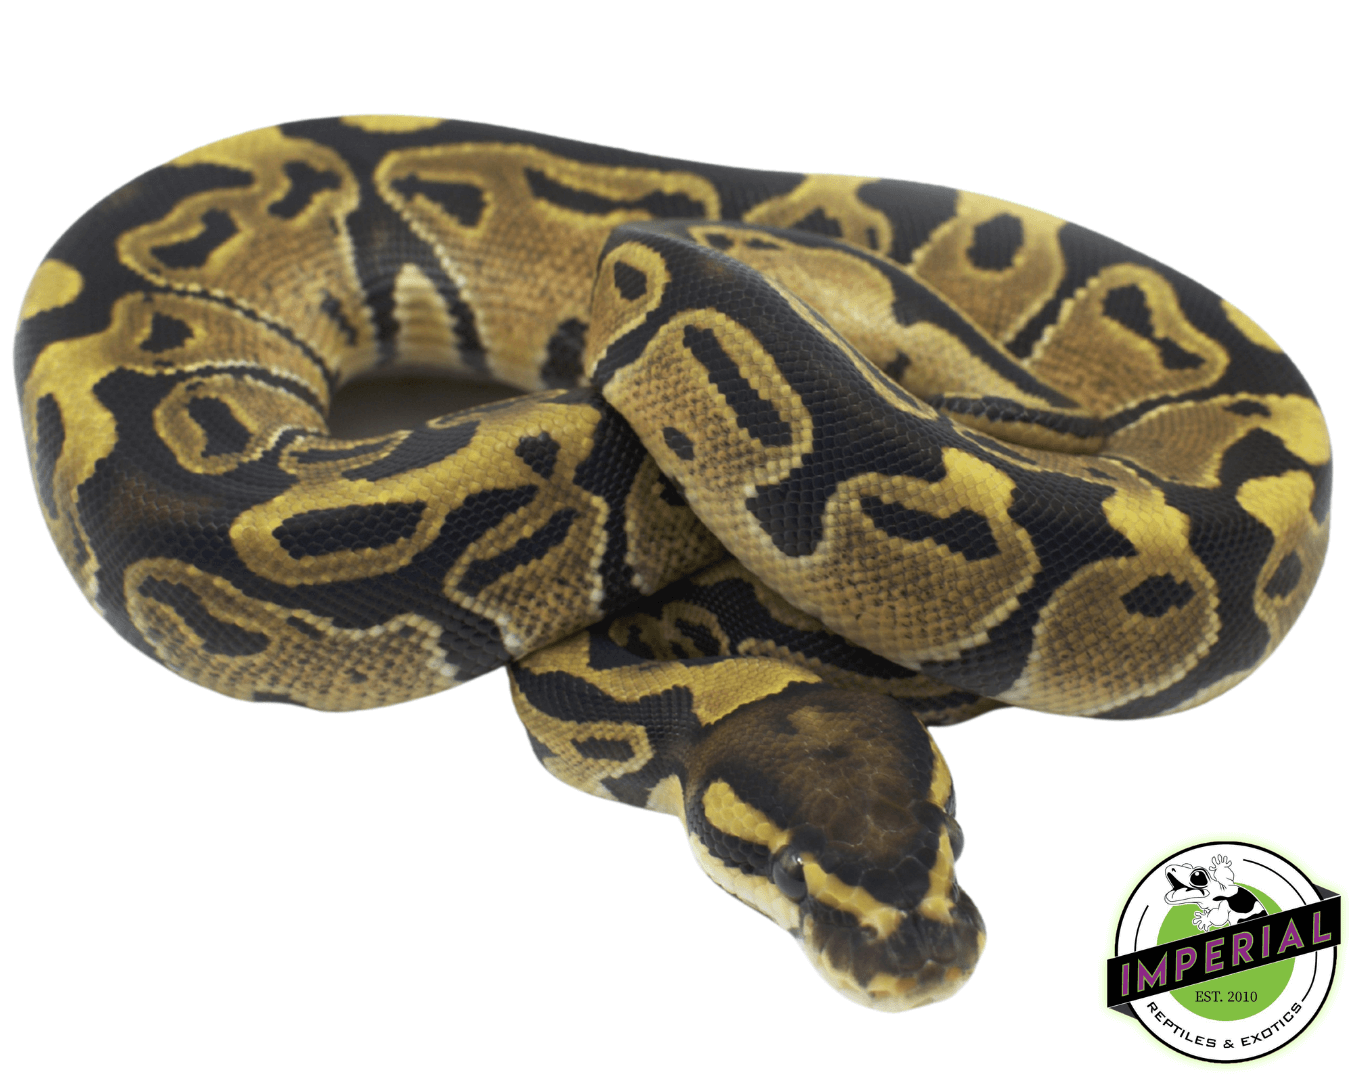 vanilla ball python for sale, buy reptiles online